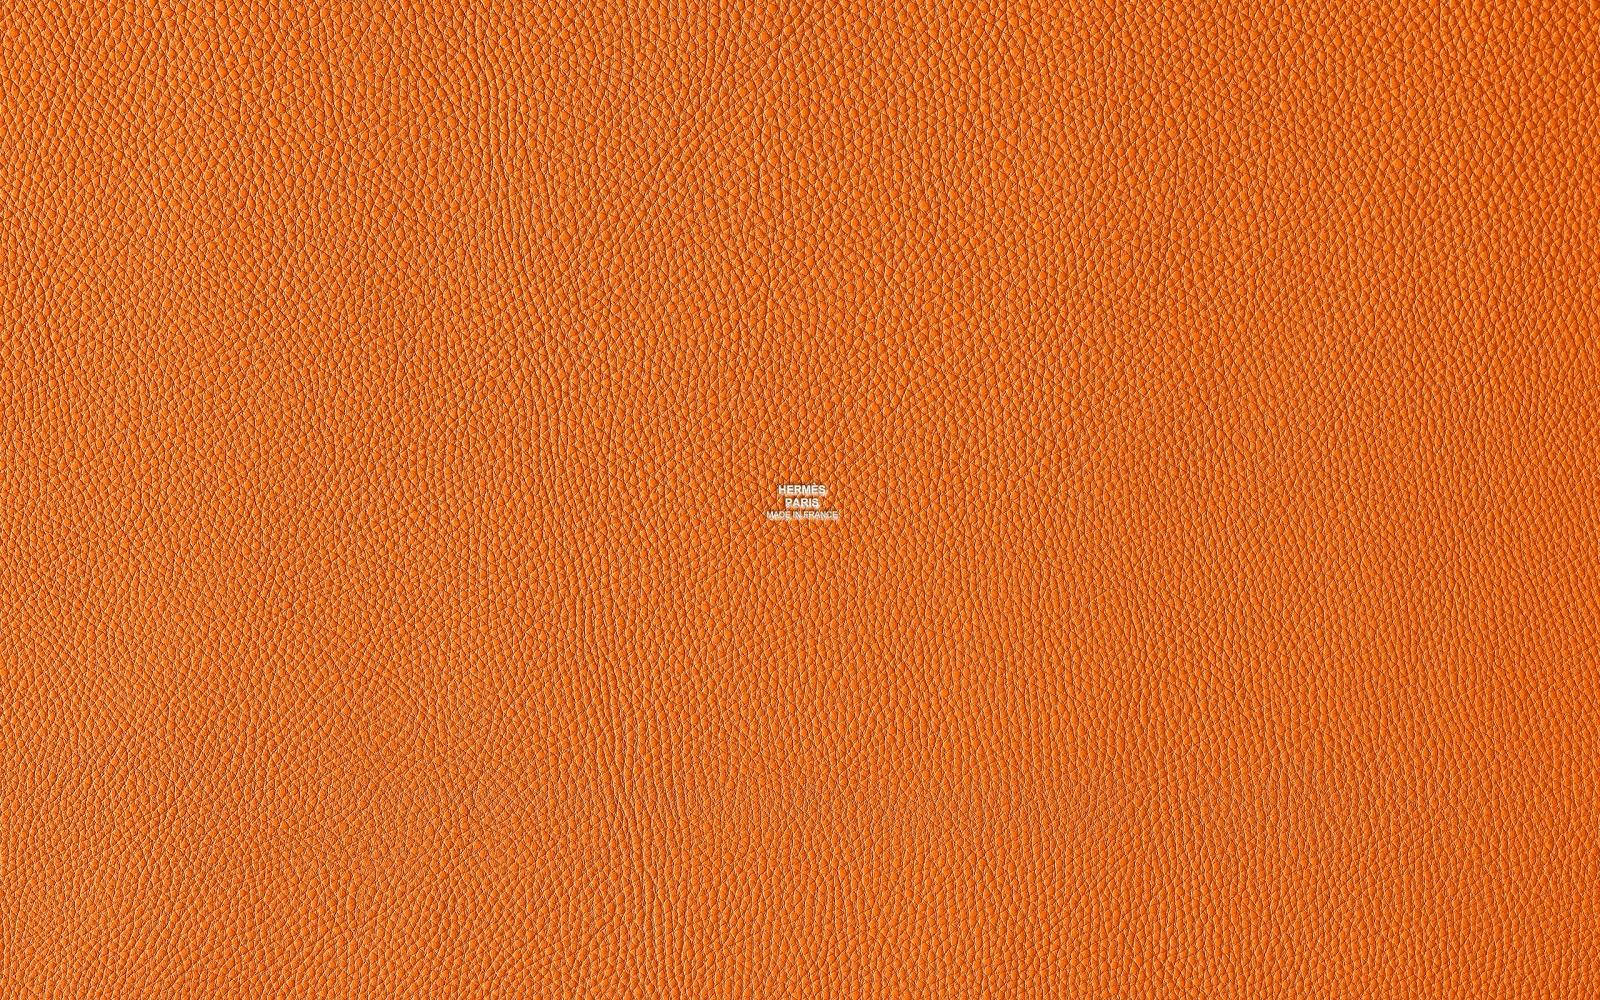 Hermes Logo On Textured Orange Background Wallpaper